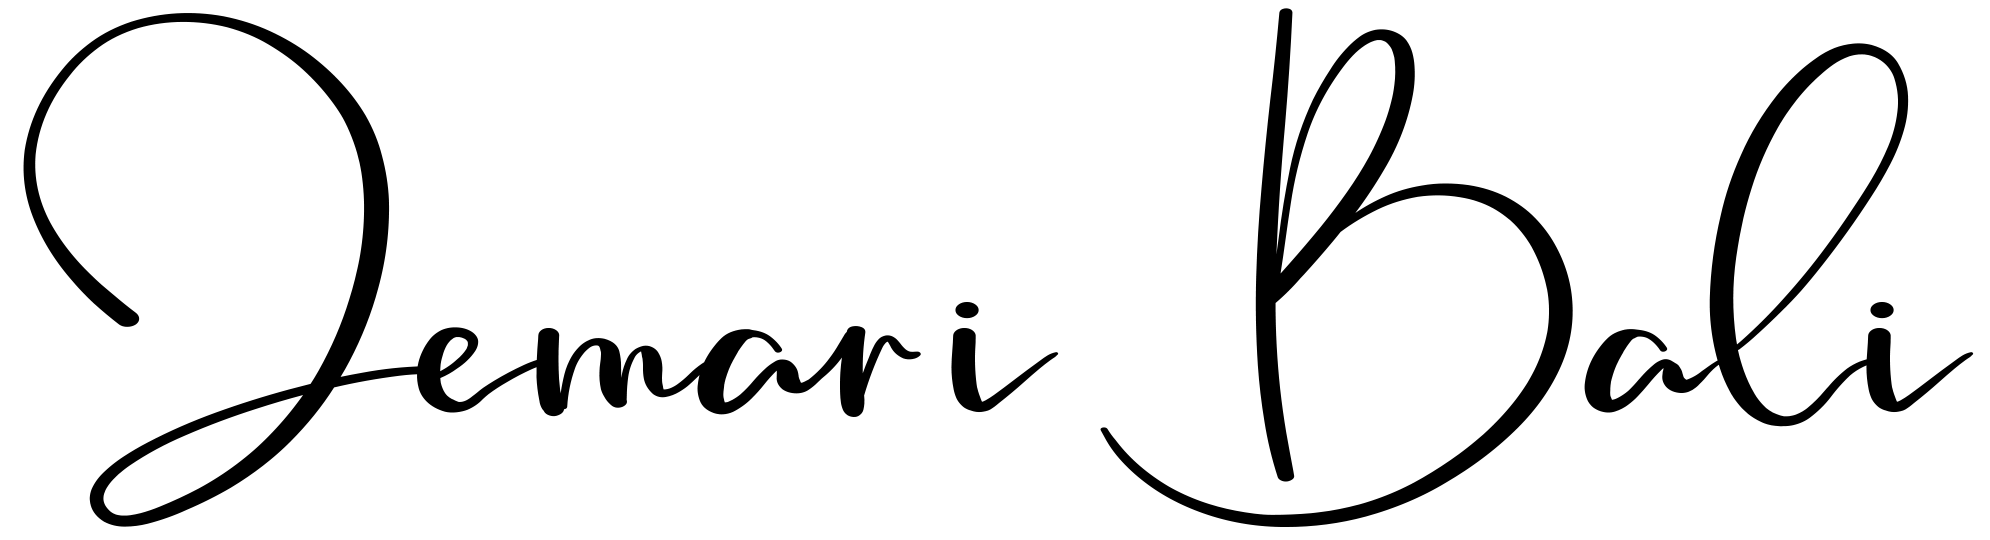 logo jemari bali